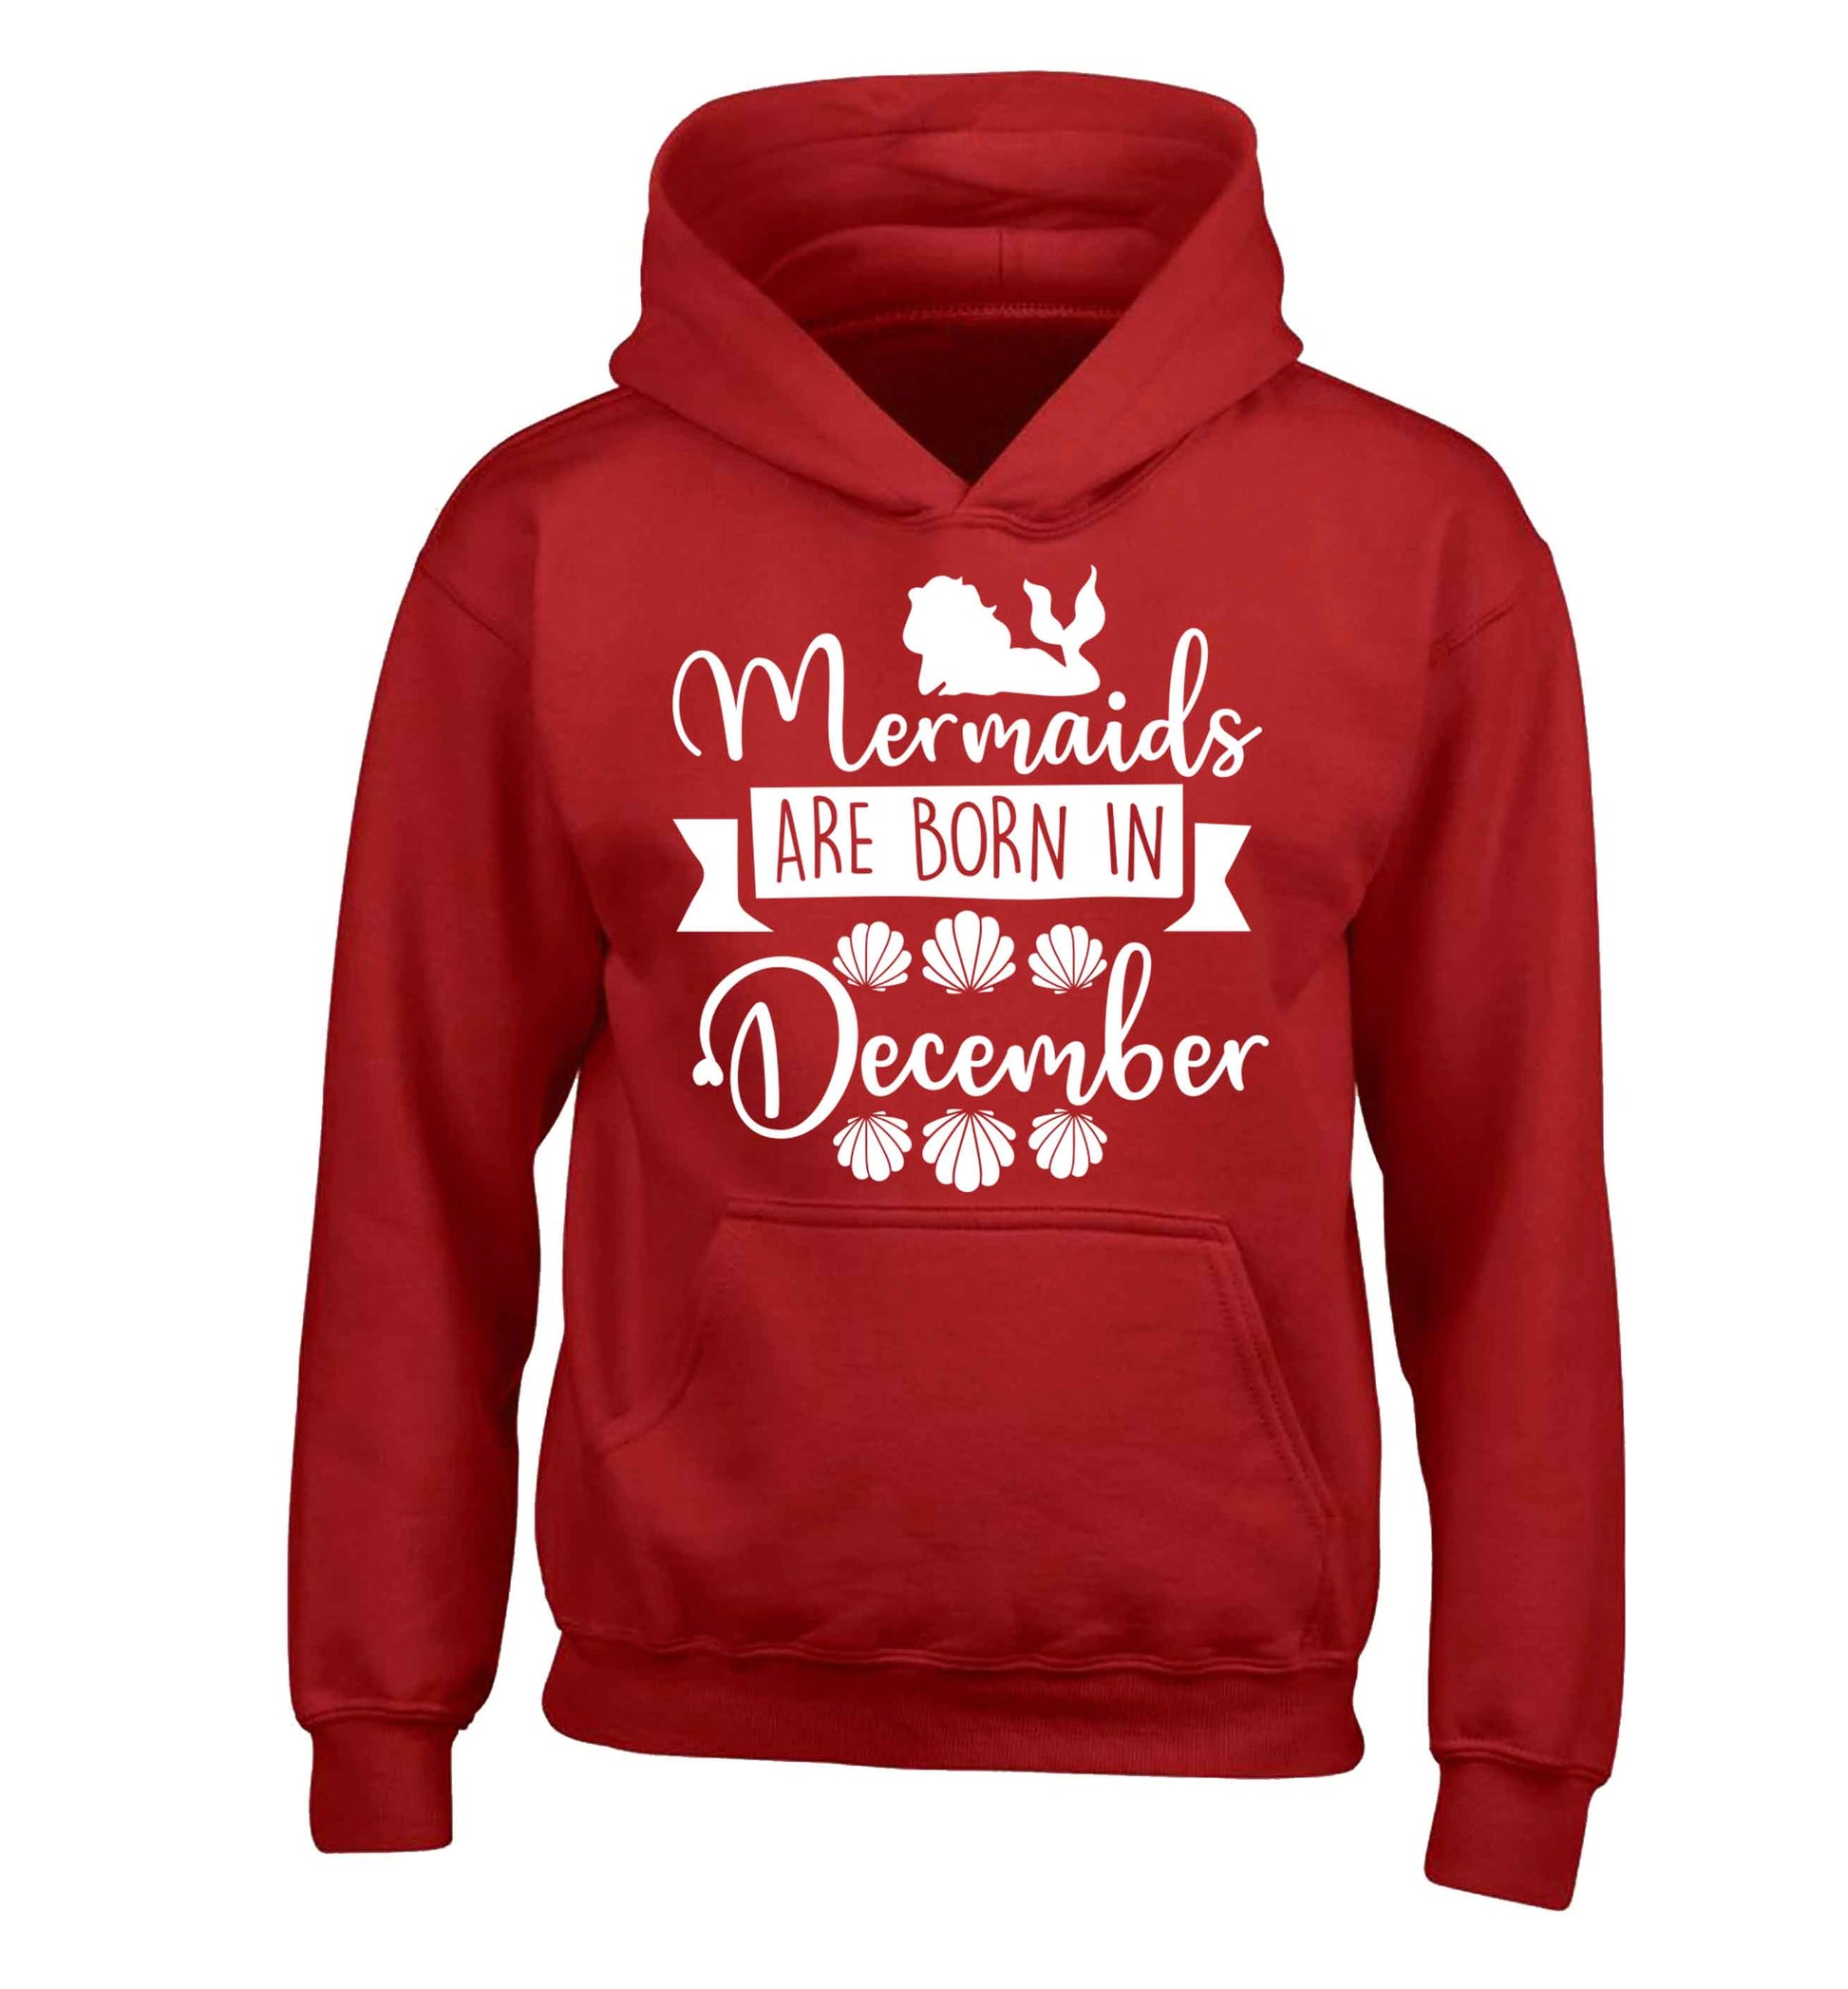 Mermaids are born in December children's red hoodie 12-13 Years